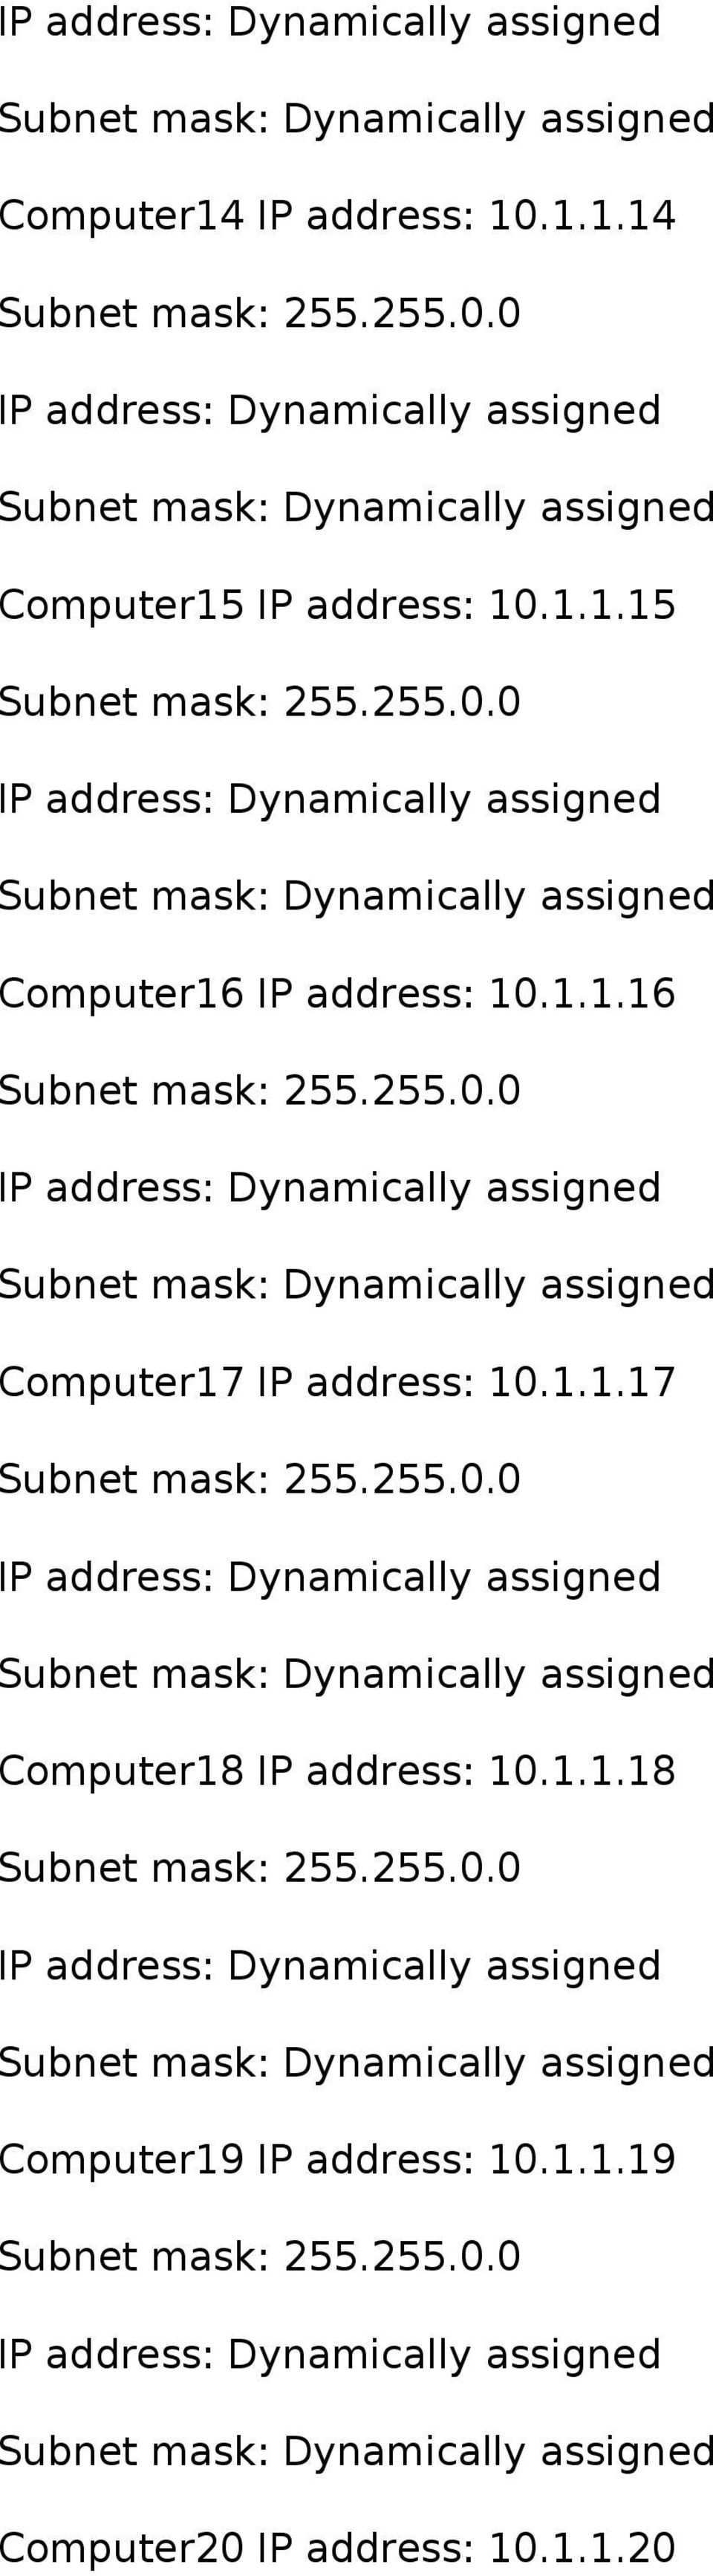 1.1.17 Computer18 IP address: 10.1.1.18 Computer19 IP address: 10.